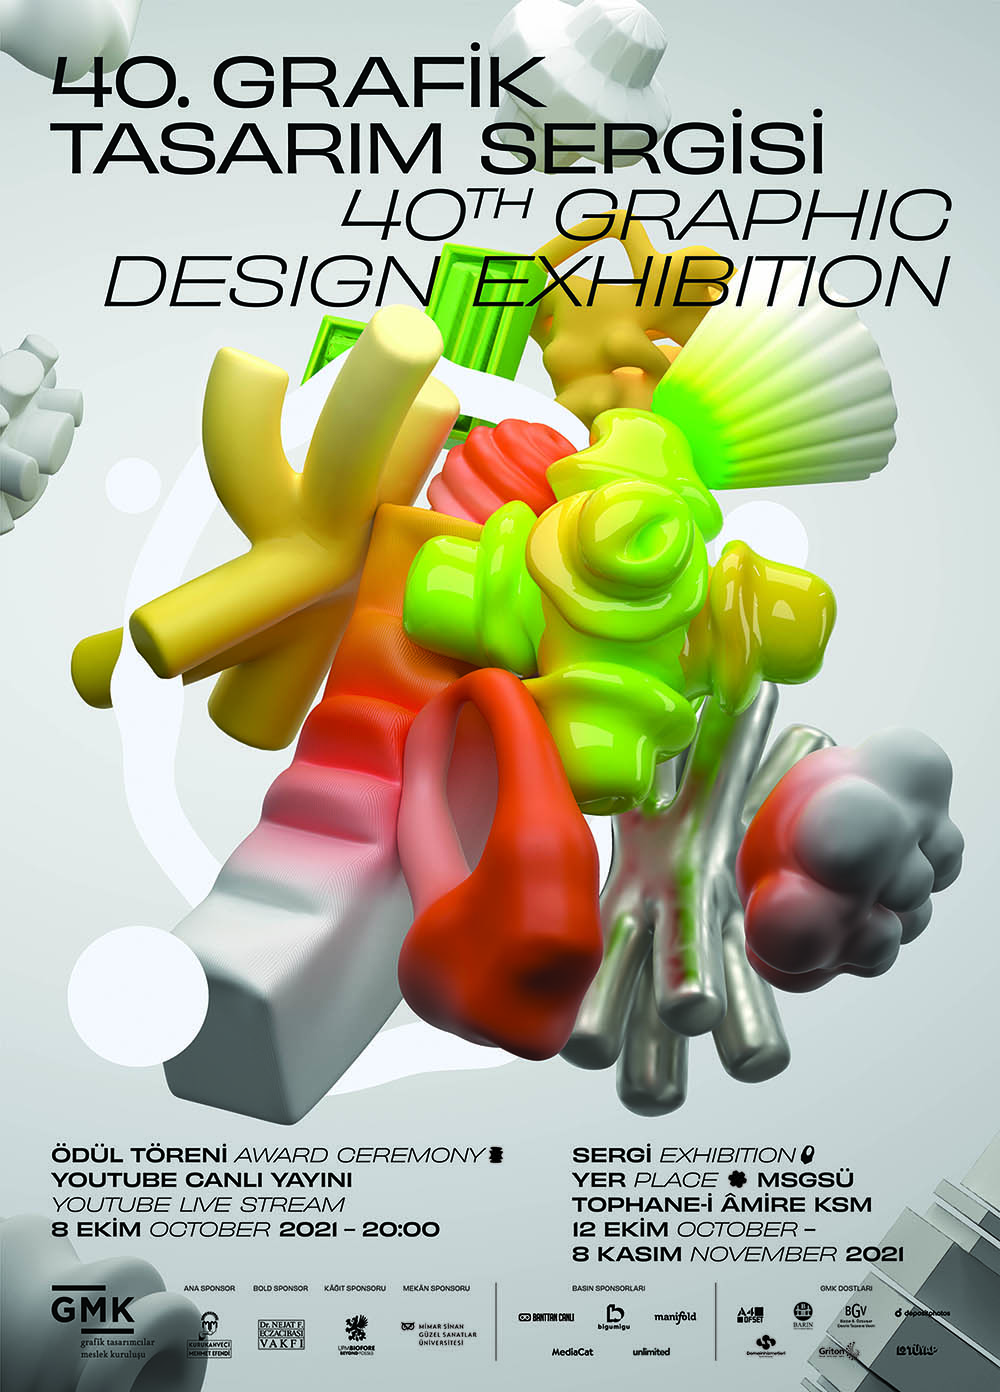 40th Graphic Design Exhibition